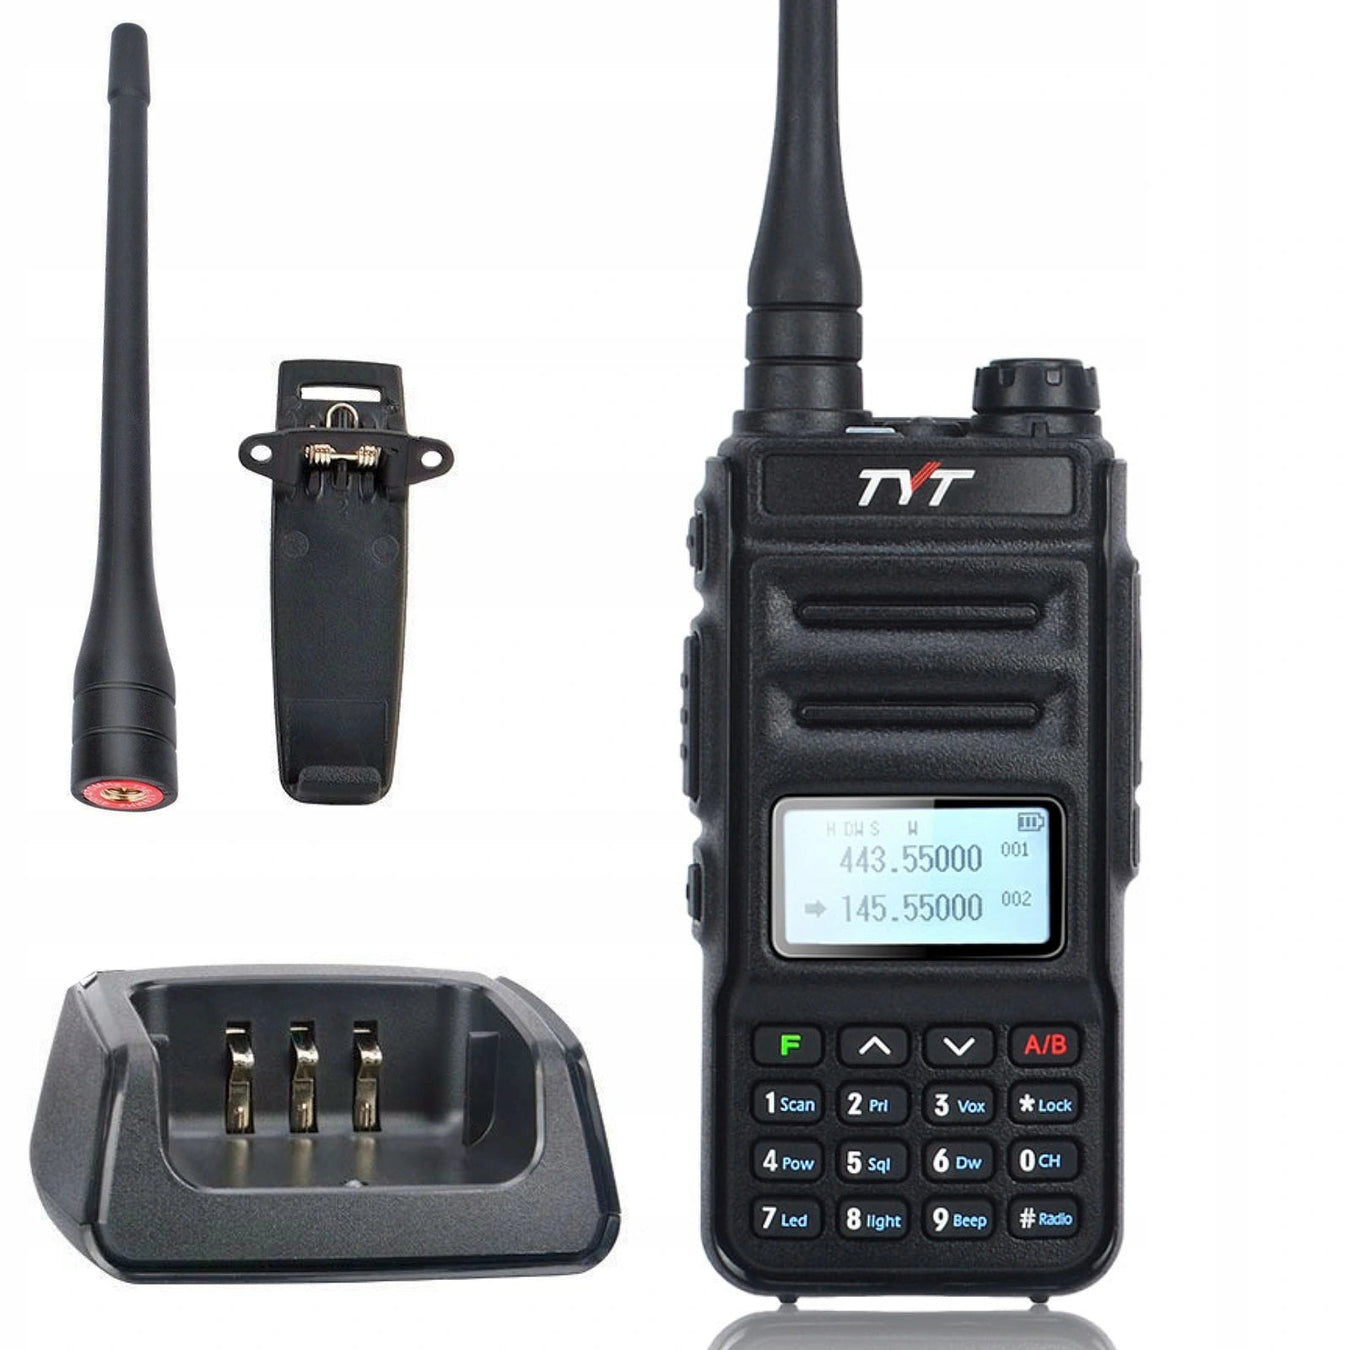 TYT walkie-talkies